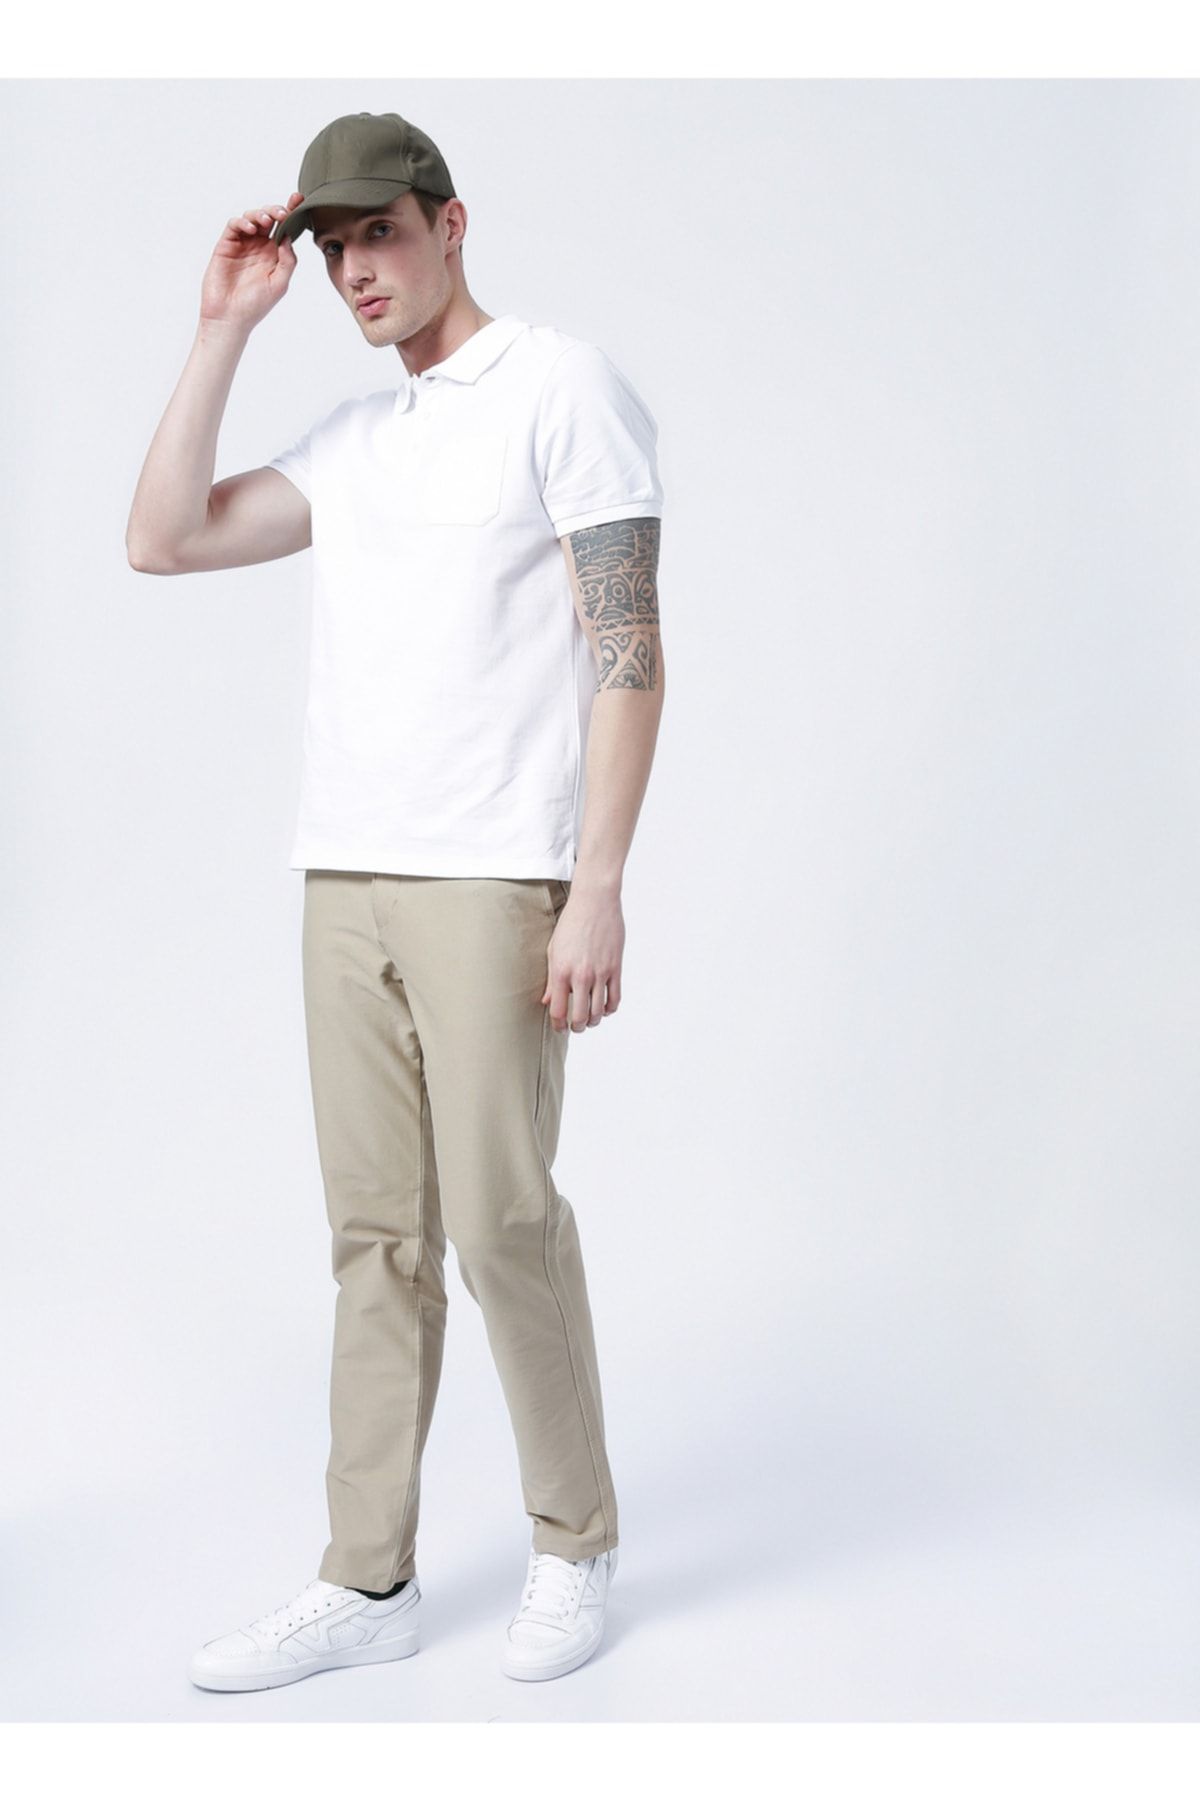 LİMON COMPANY Limon Basic Düz Beyaz Erkek Polo T-shirt - Skor21